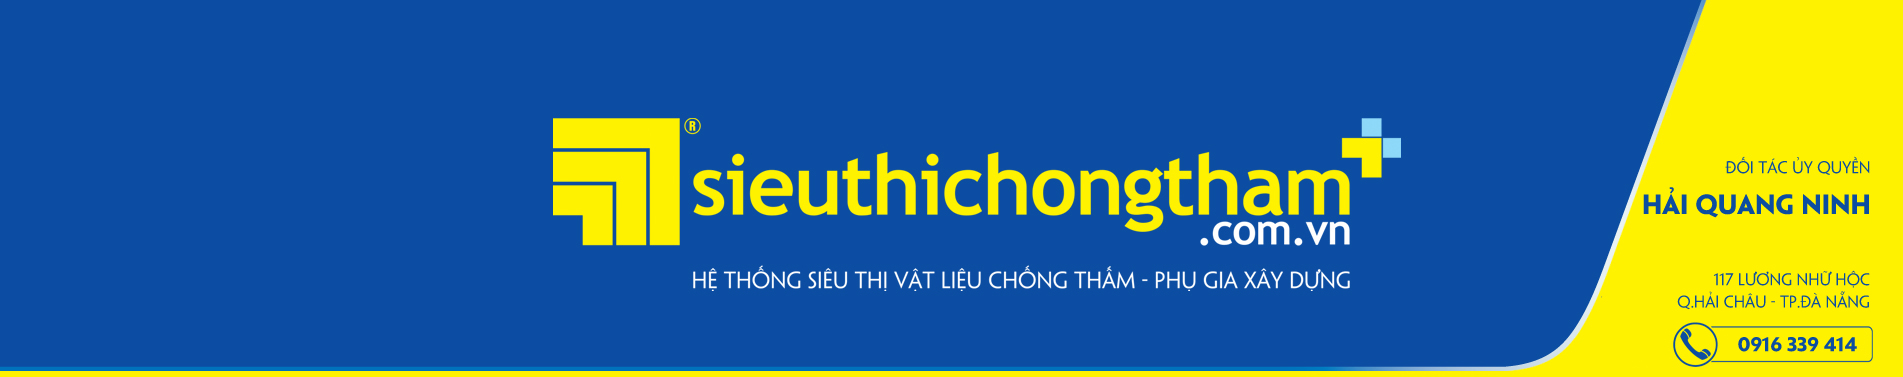 Hai Quang Ninh